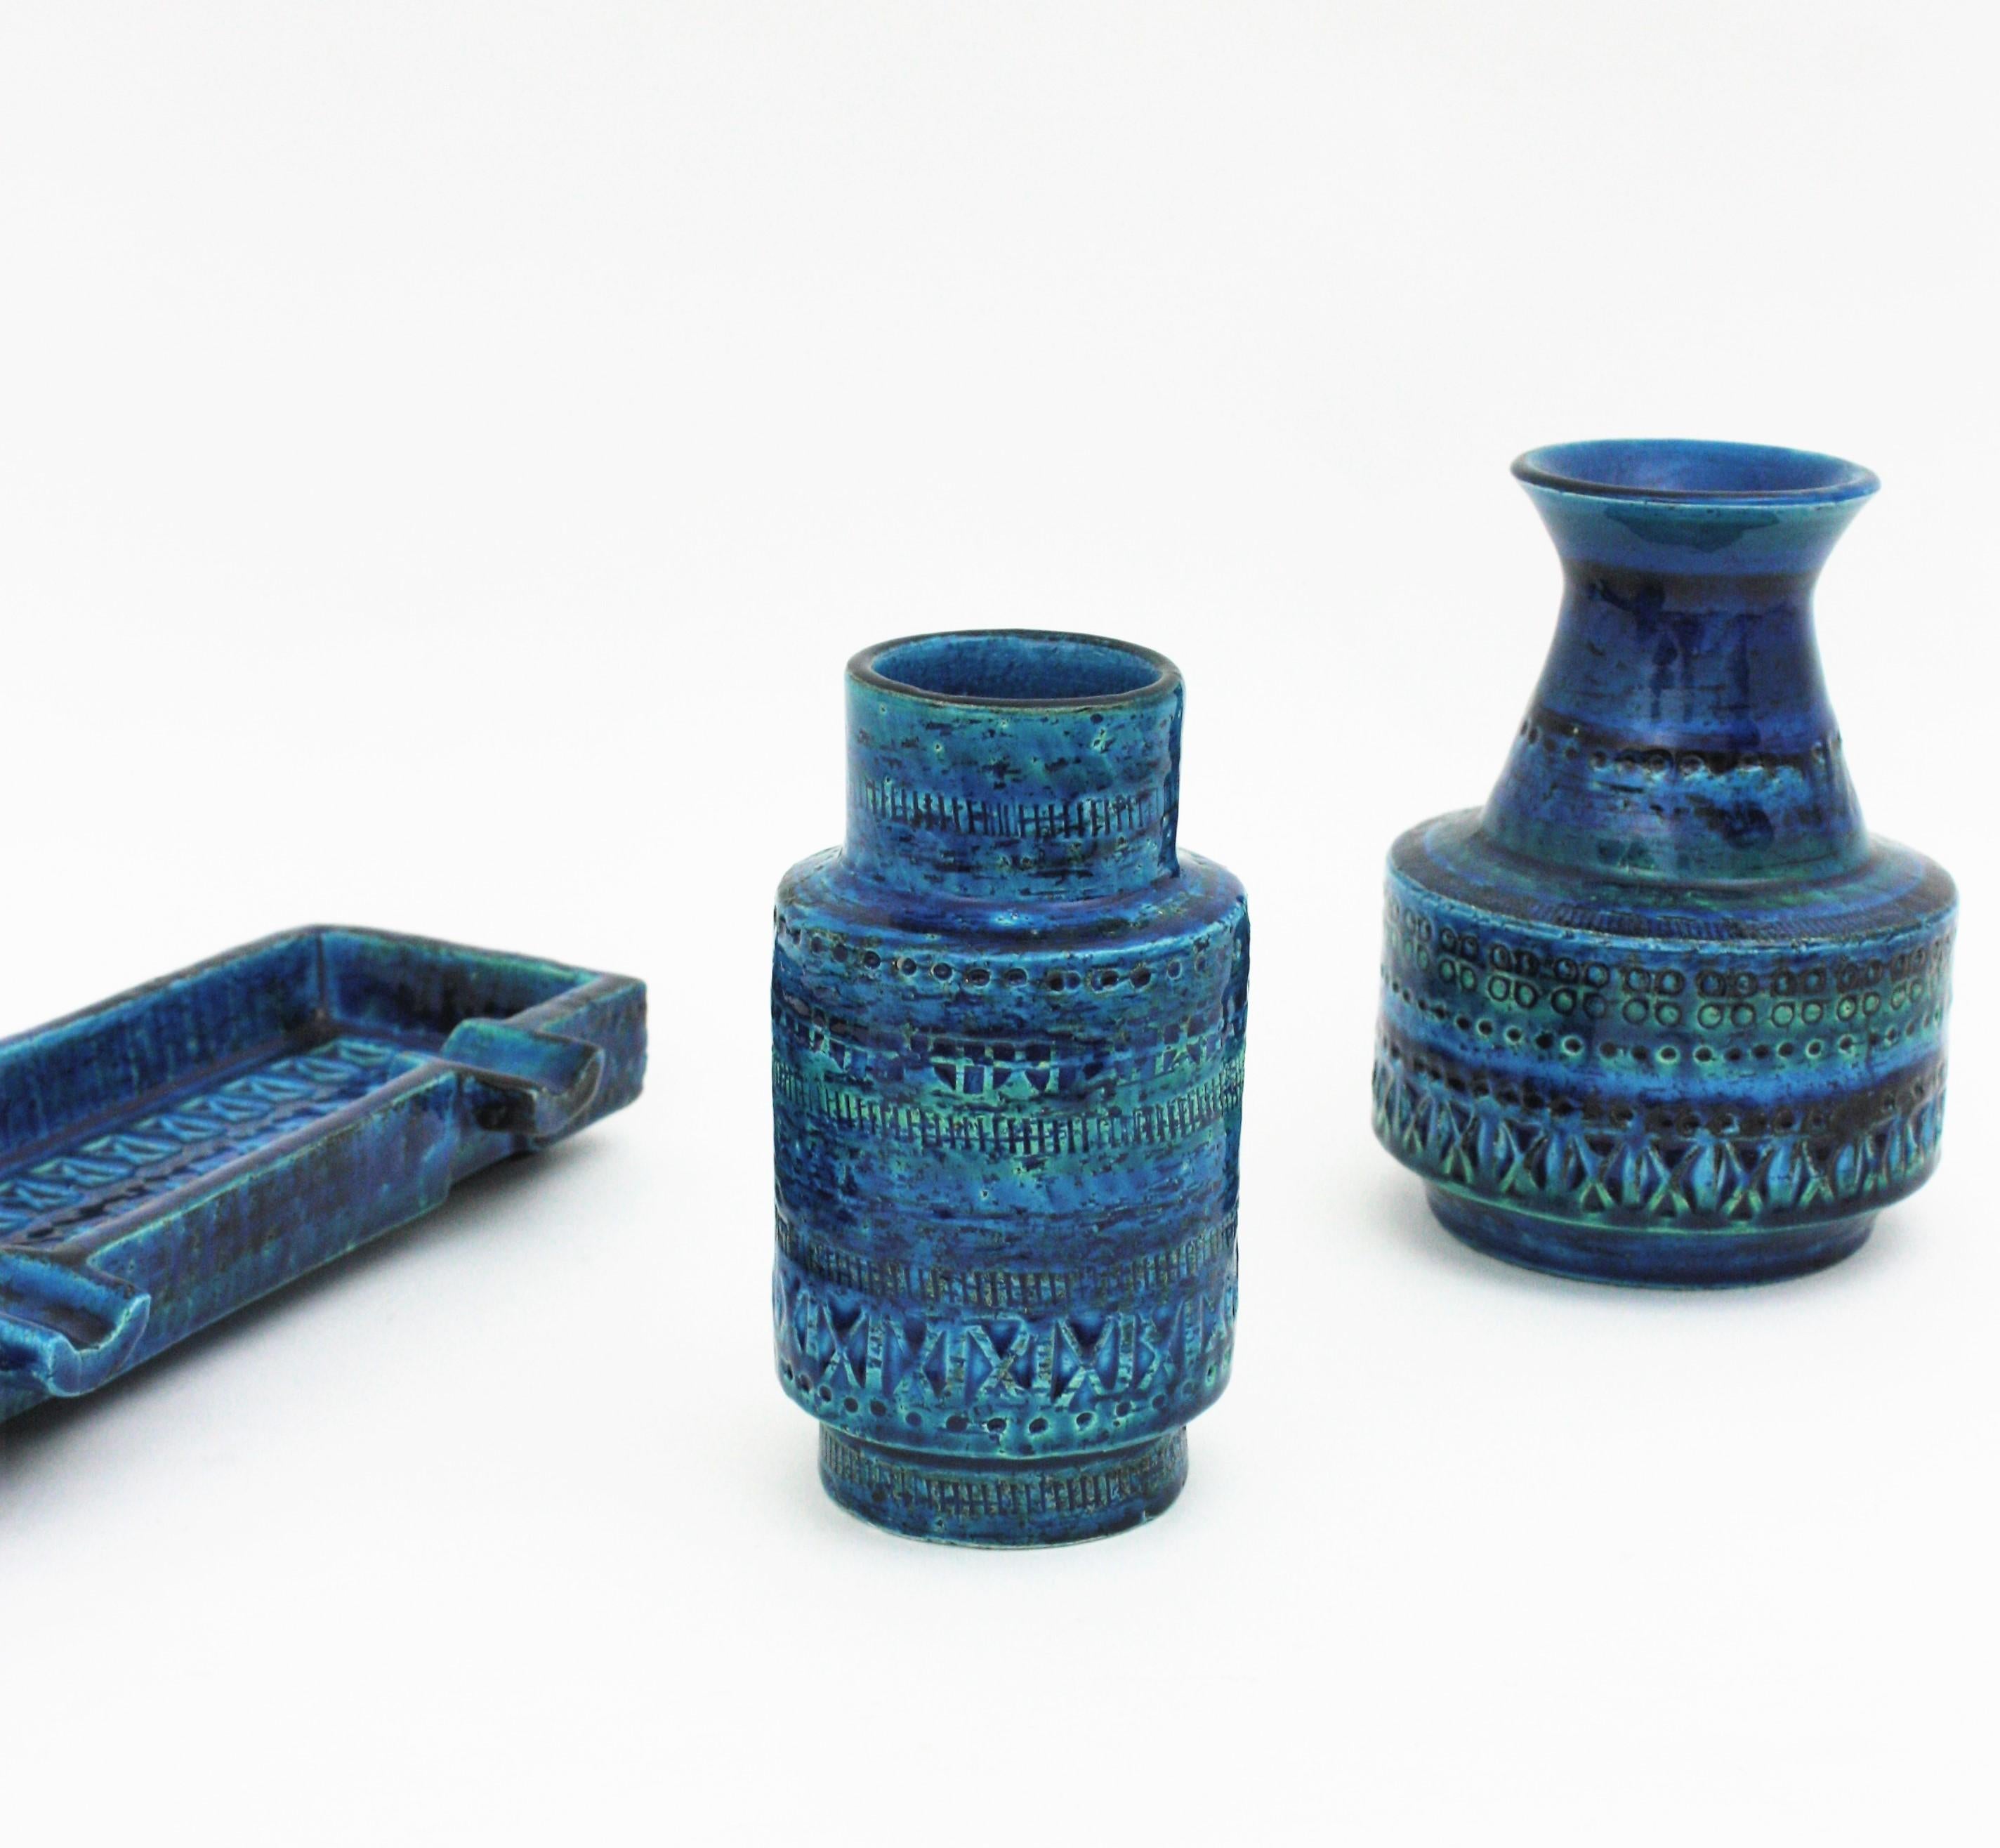 Hand-Crafted Bitossi Aldo Londi Rimini Blue Ceramic Vase, 1960s For Sale